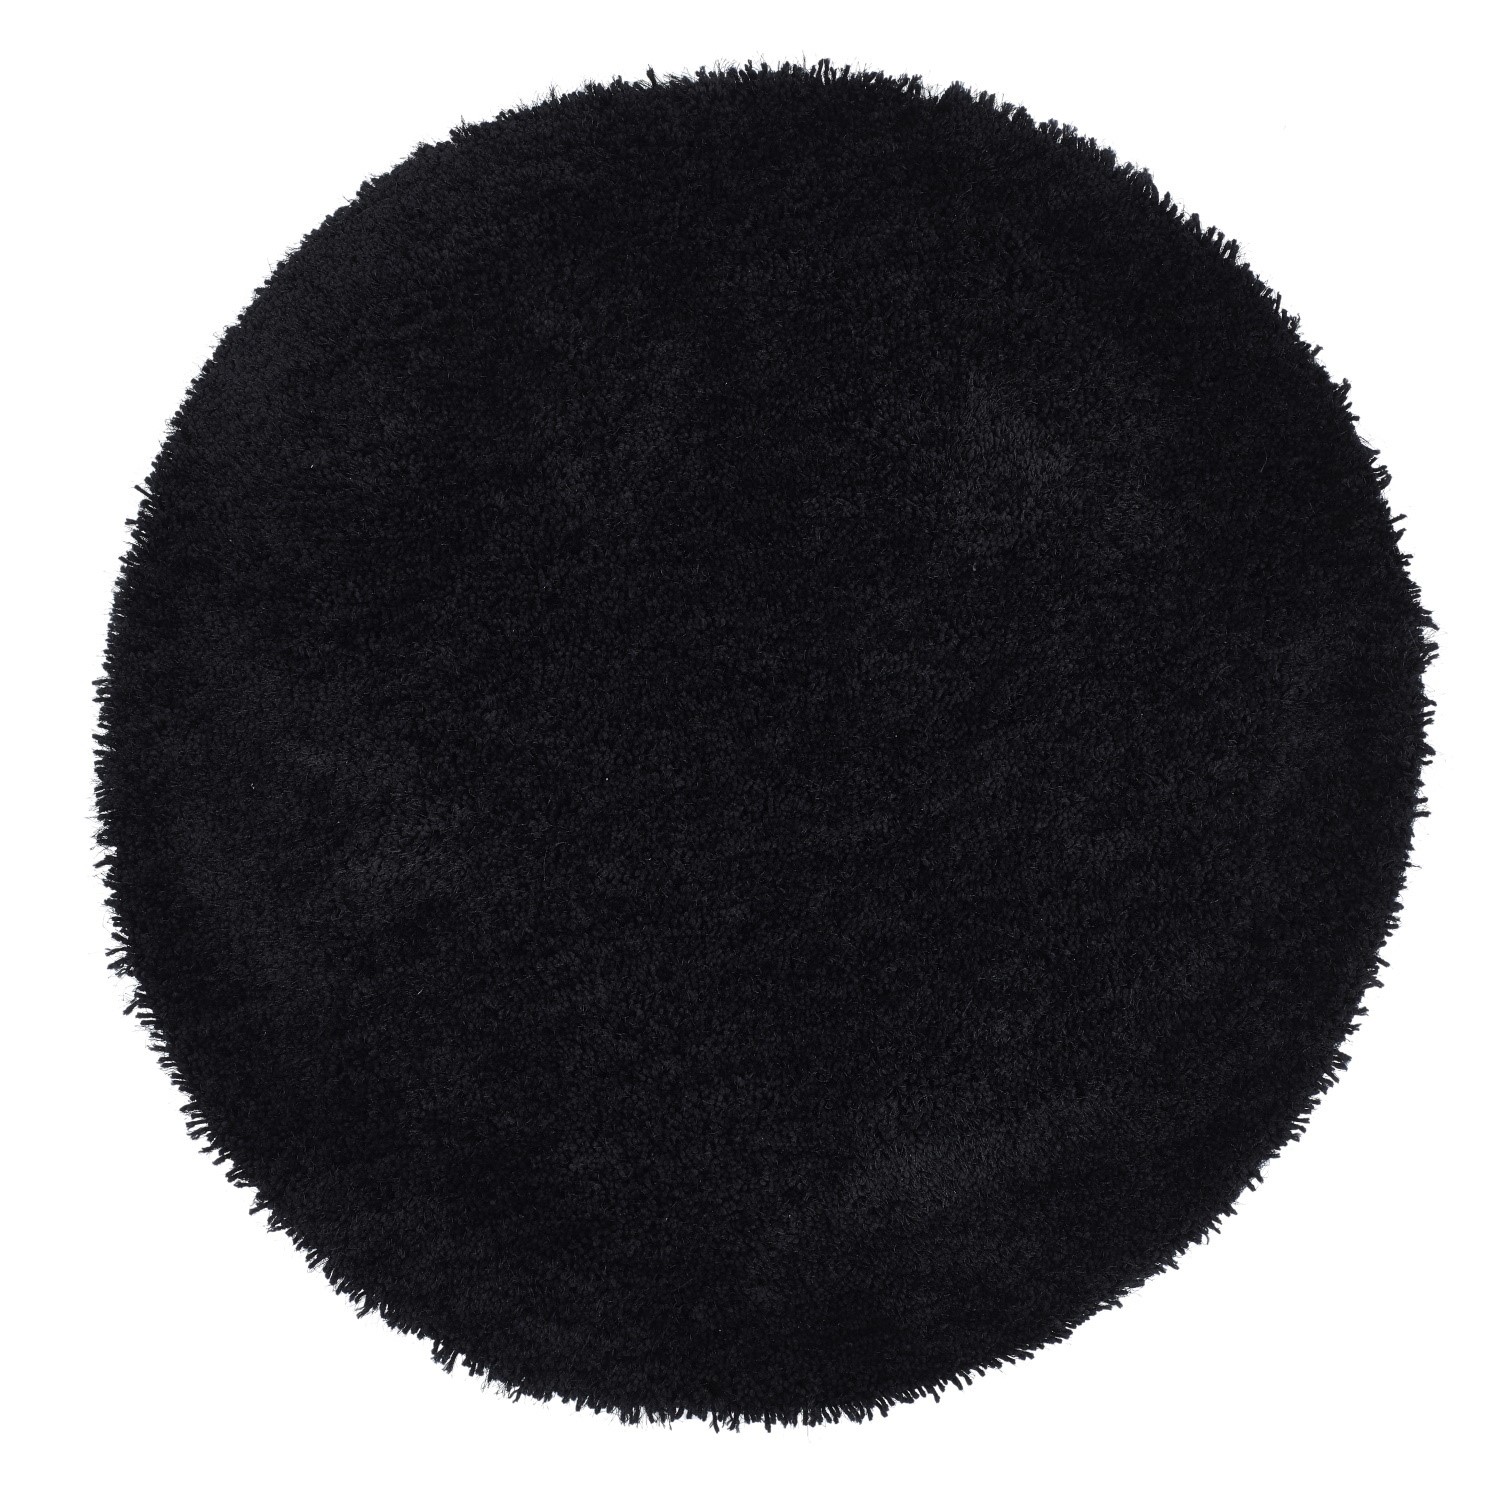 Photo of Round black shaggy rug - chicago